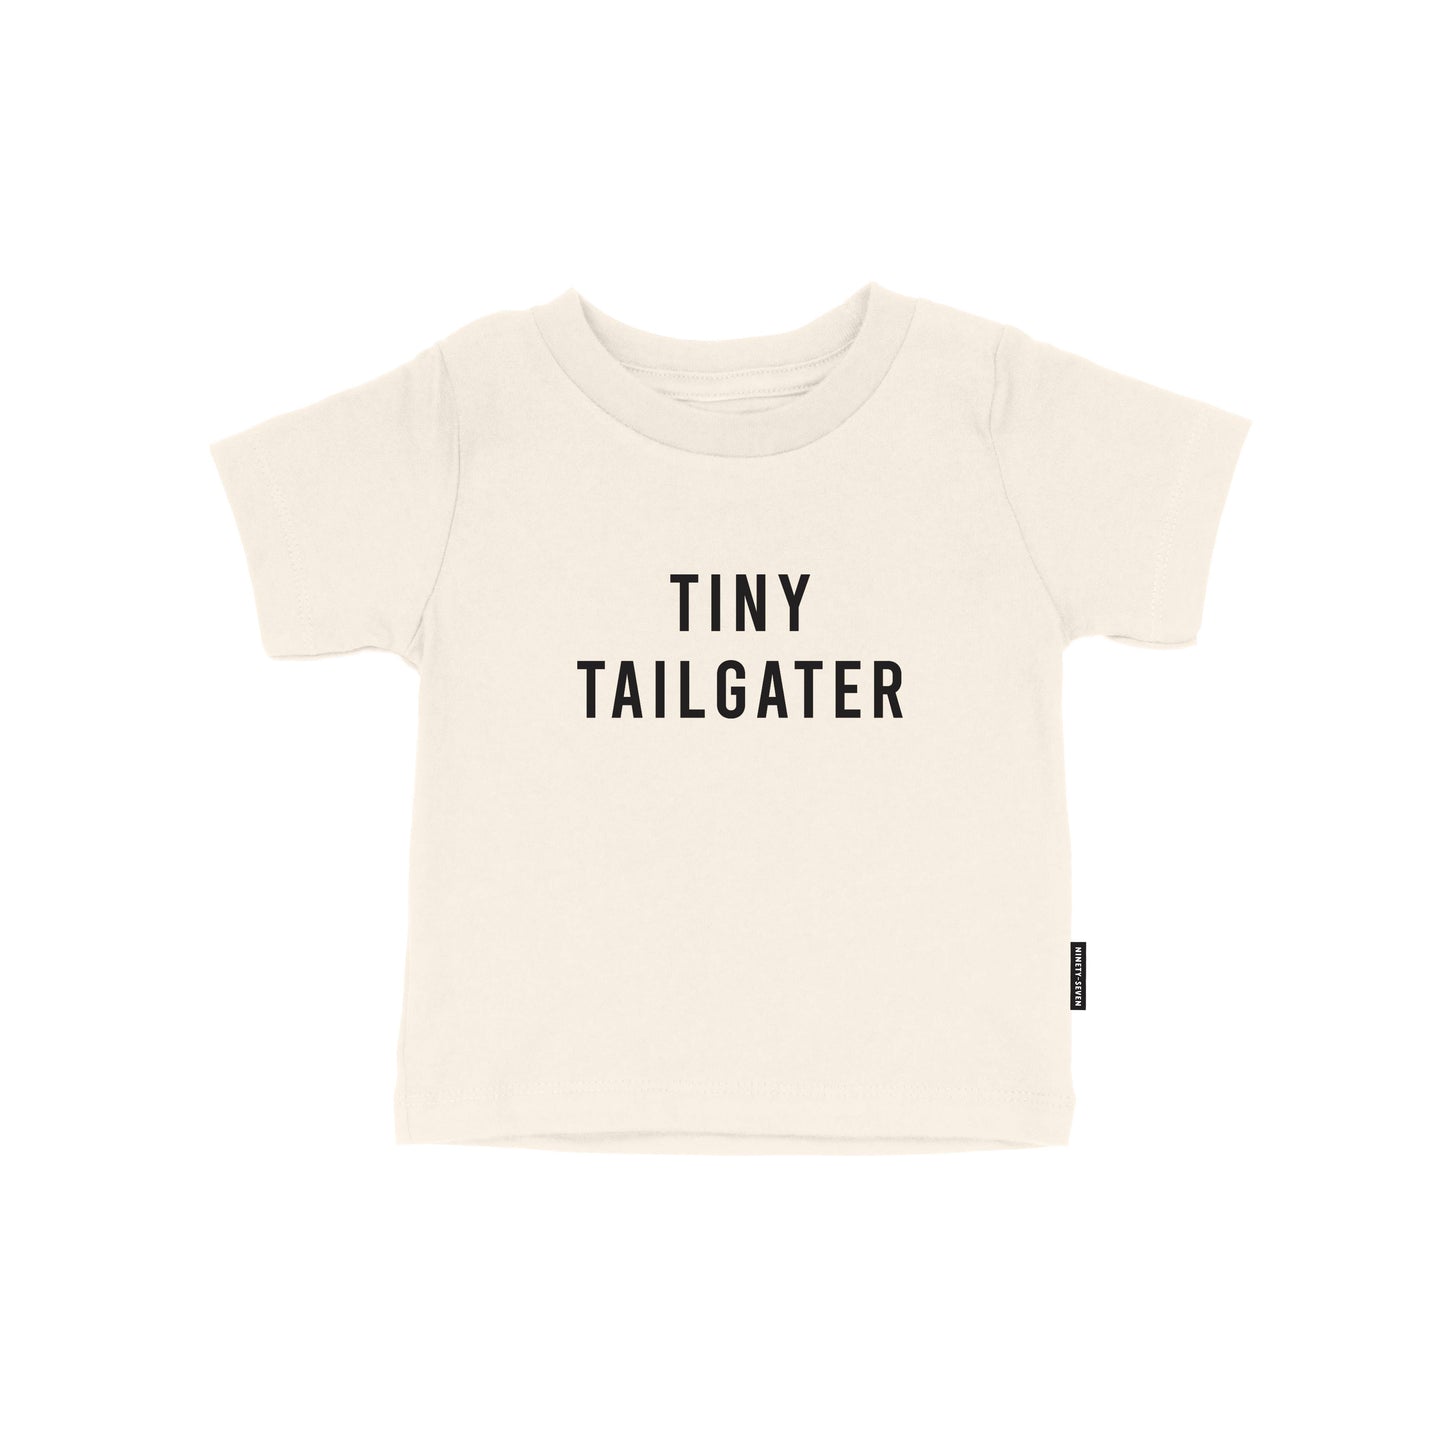 97 Design Co. - Tiny Tailgater - Kids Football Tee, Toddler T-shirt, Fall